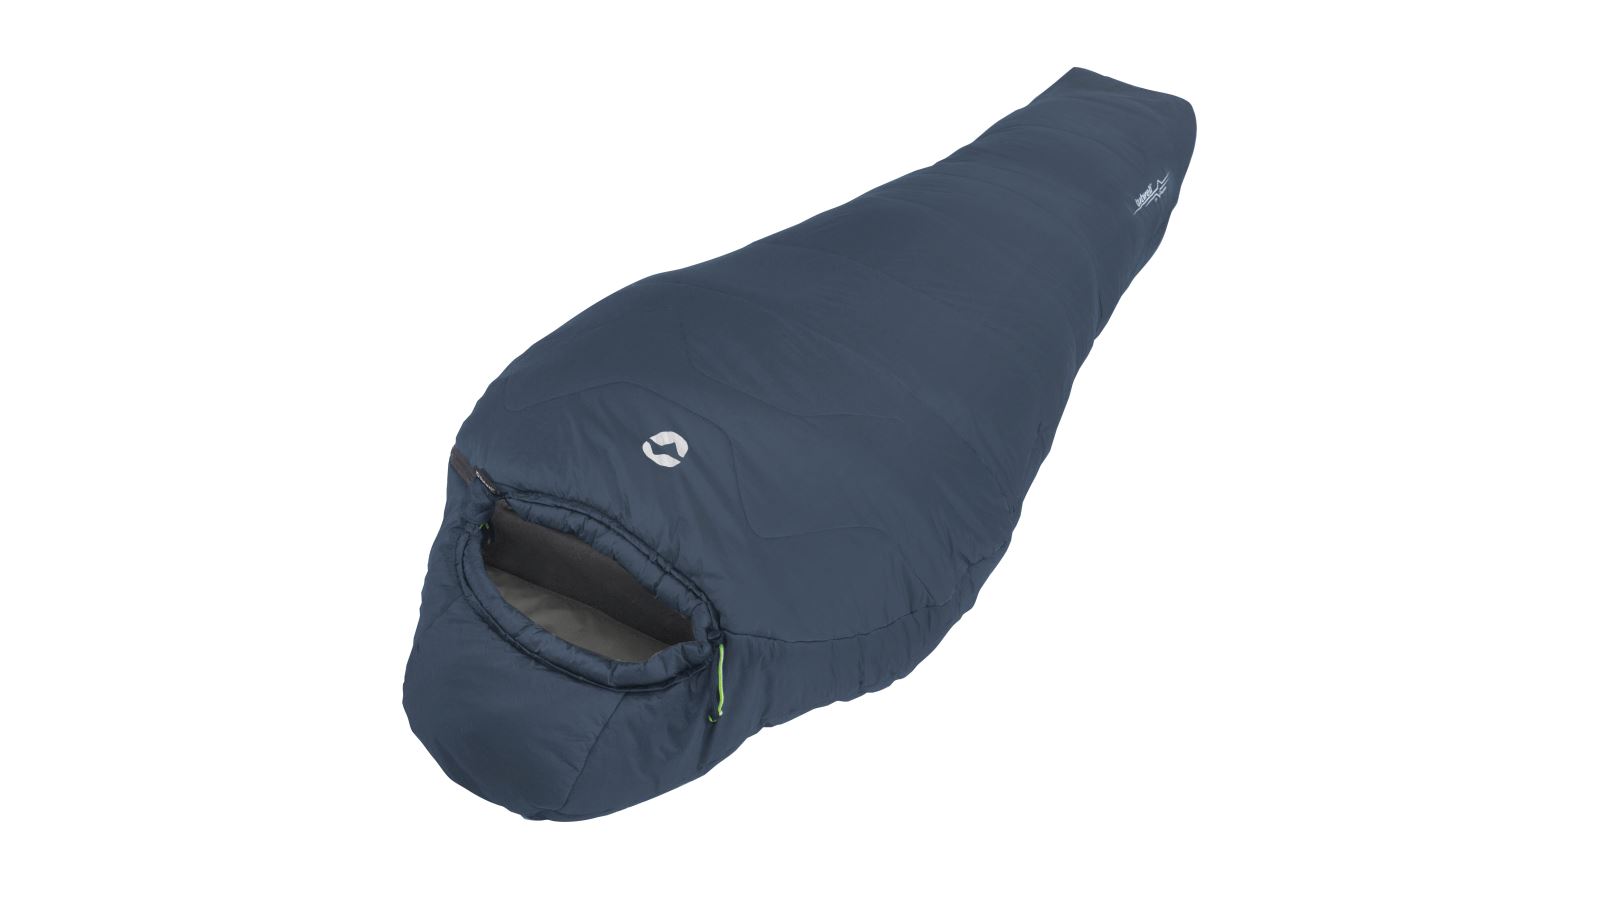 Outwell Elm sleeping bag